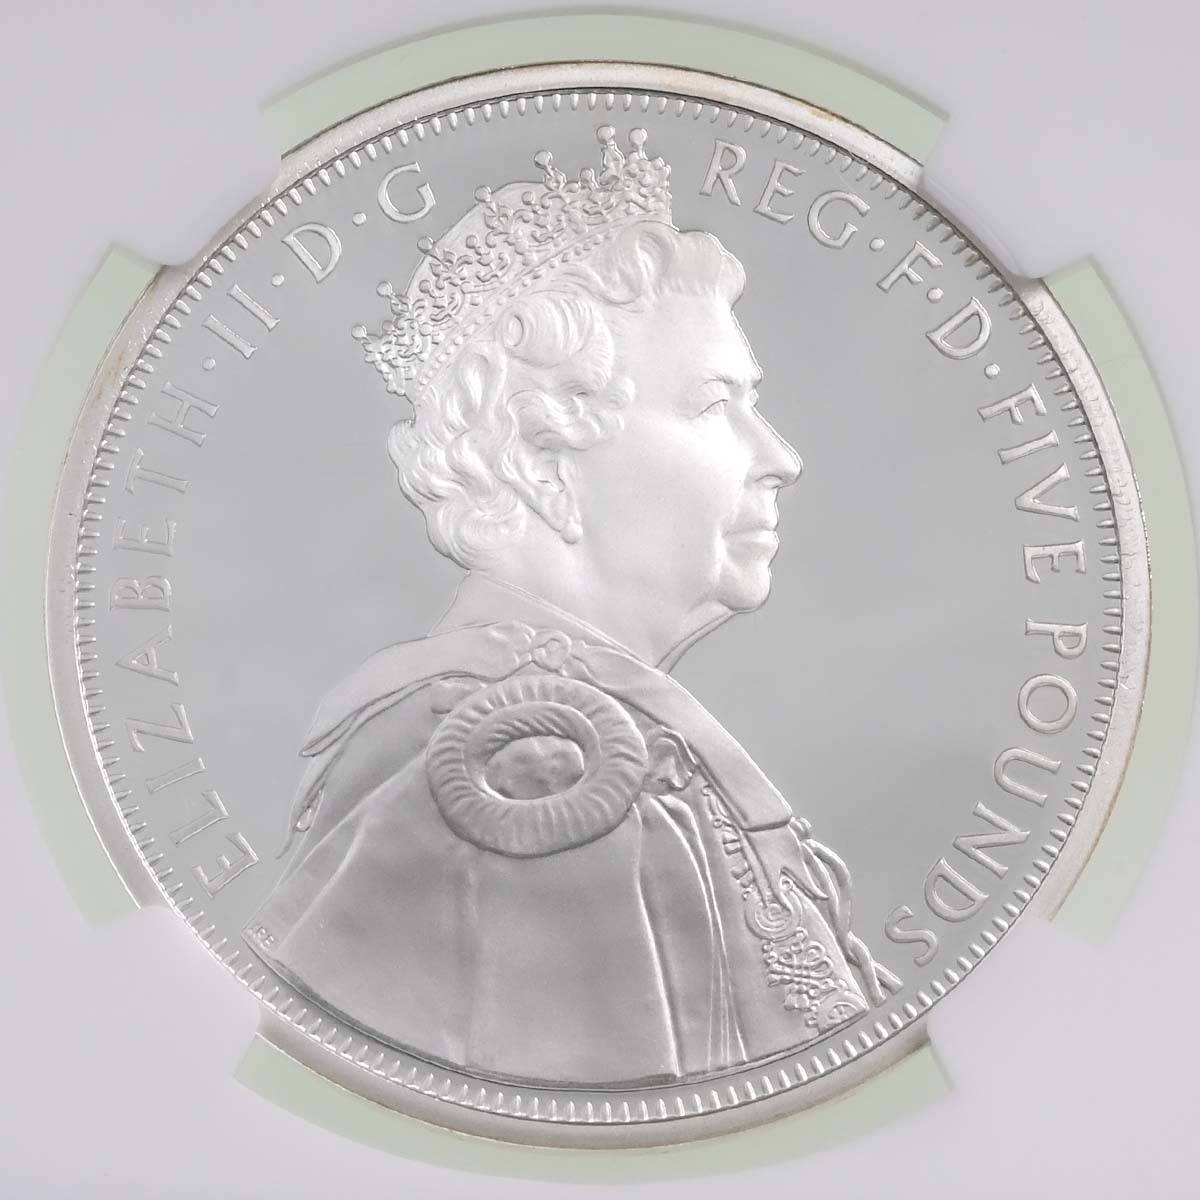 UK12DJSP 2012 Elizabeth II Diamond Jubilee £5 Crown Silver Proof Coin NGC Graded PF 70 Ultra Cameo Obverse